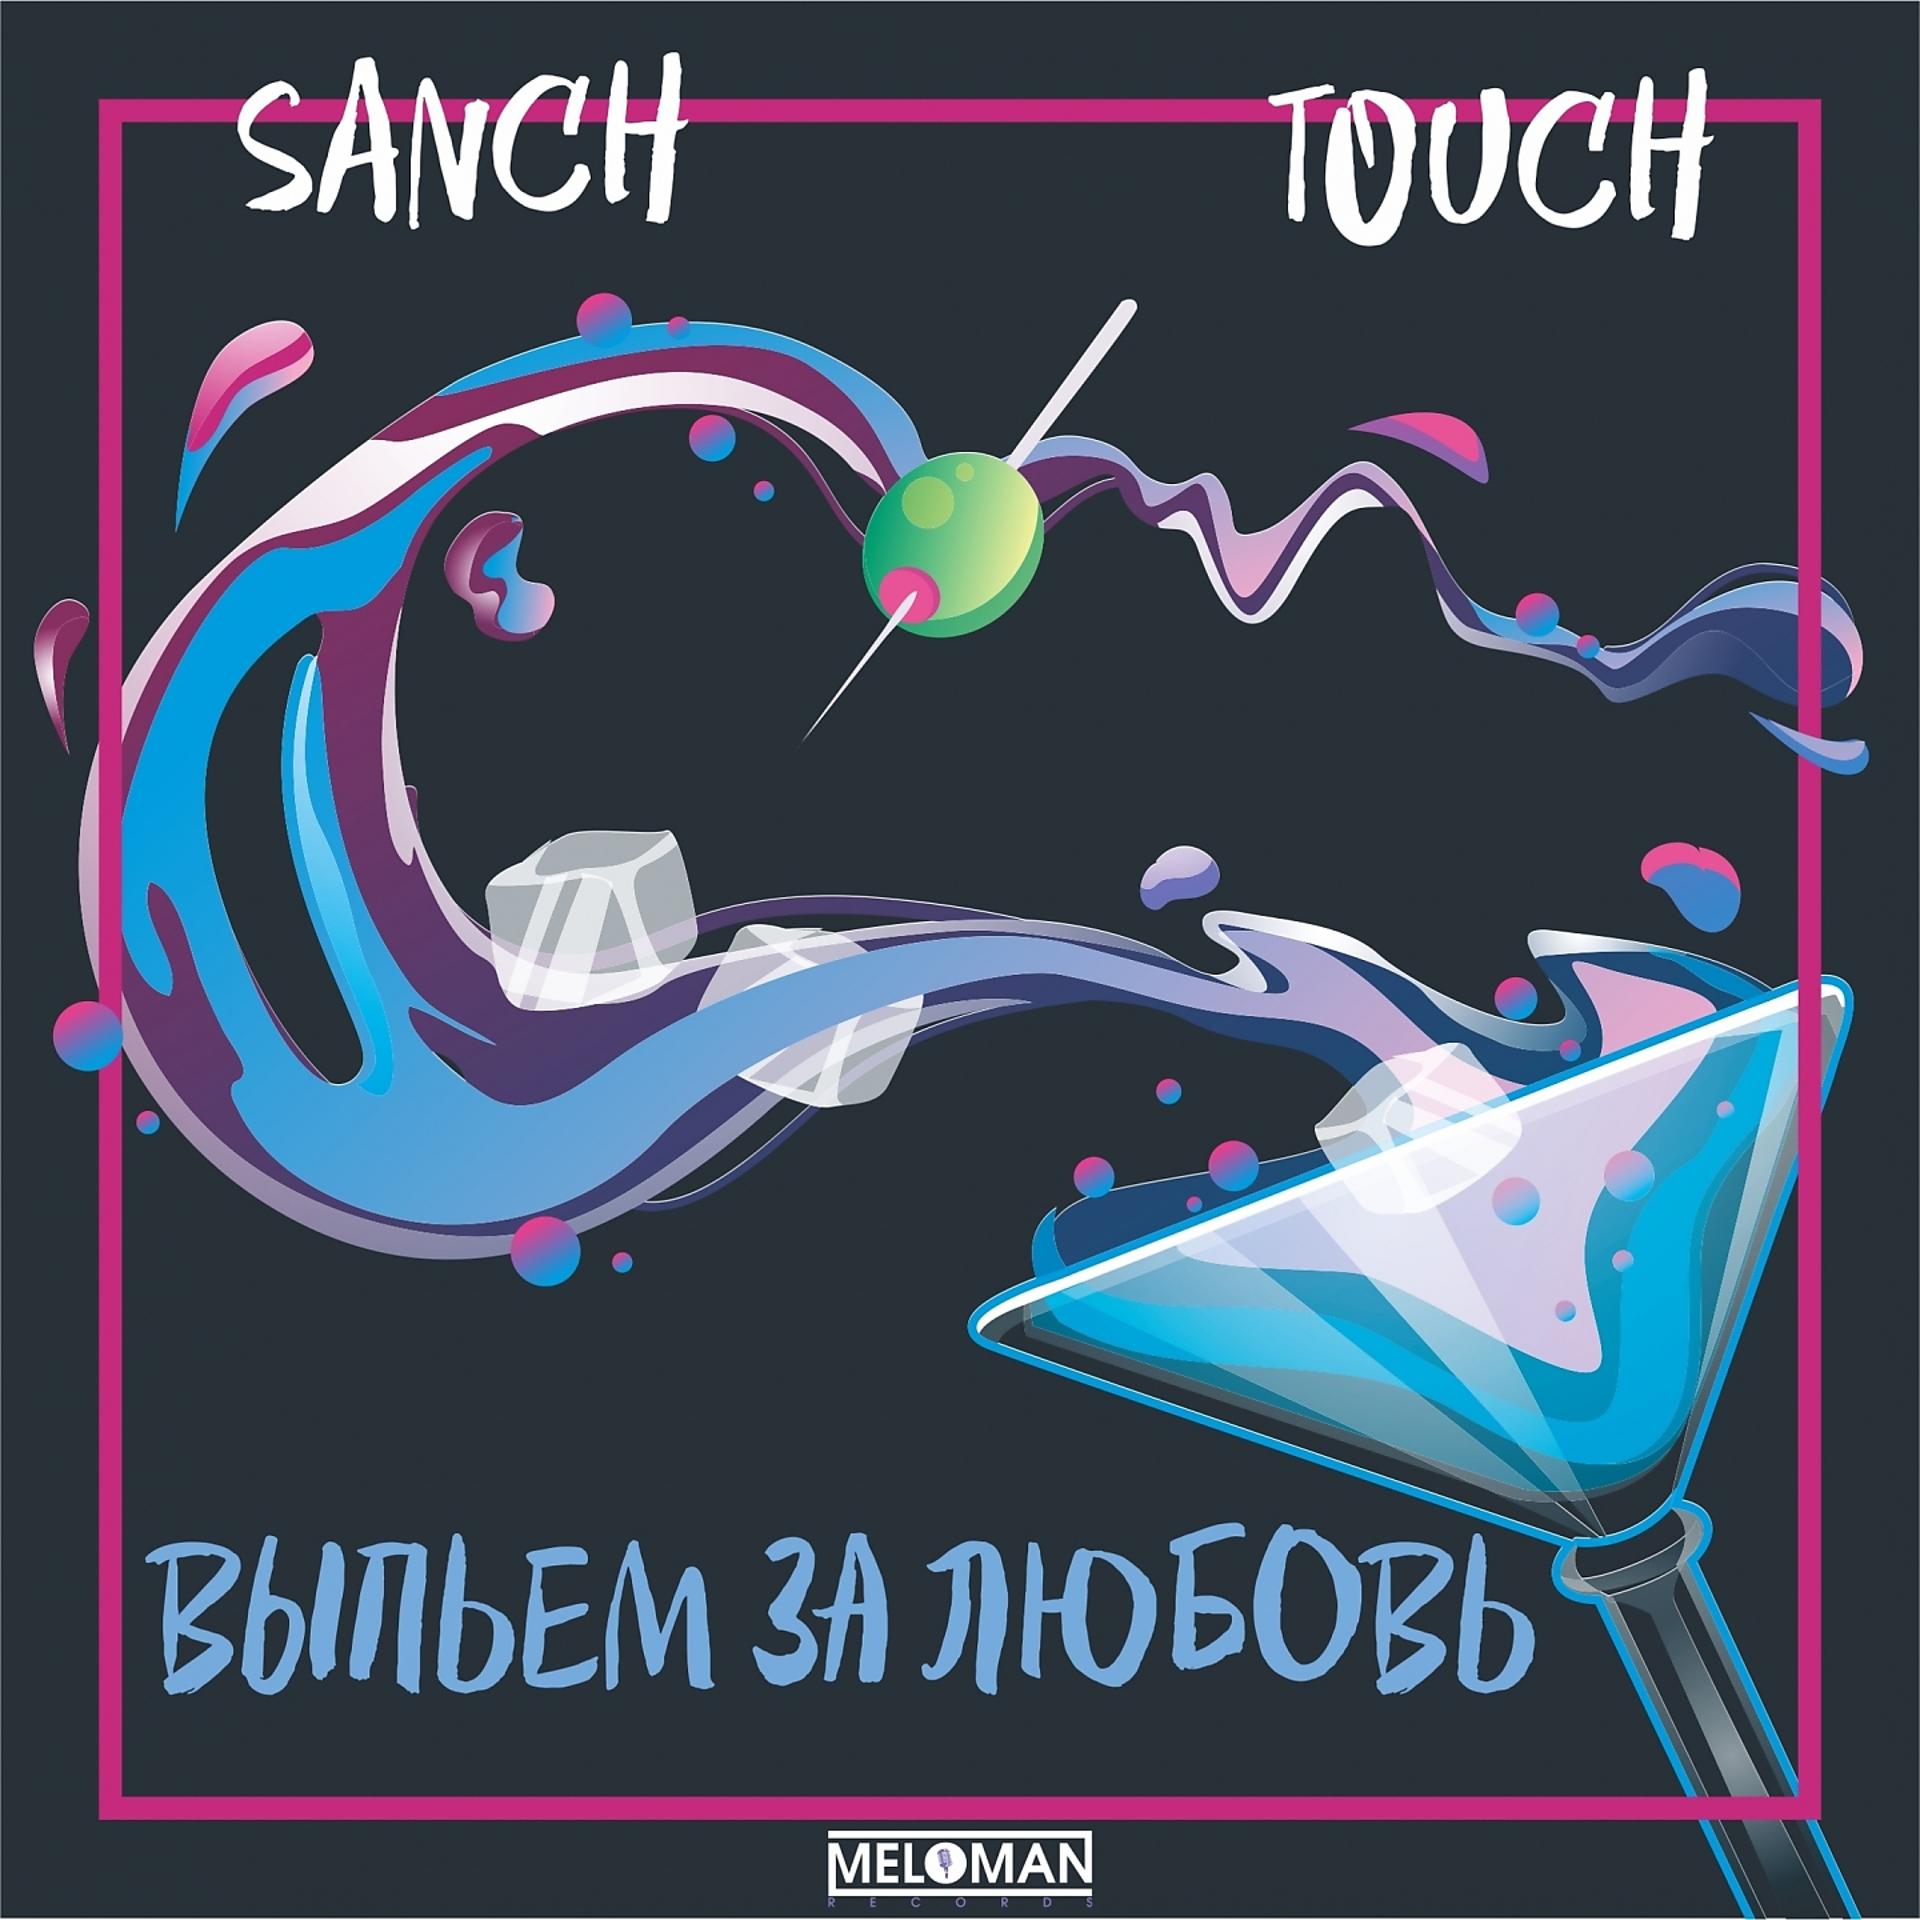 Постер к треку SANCH, The Touch - Выпьем за любовь